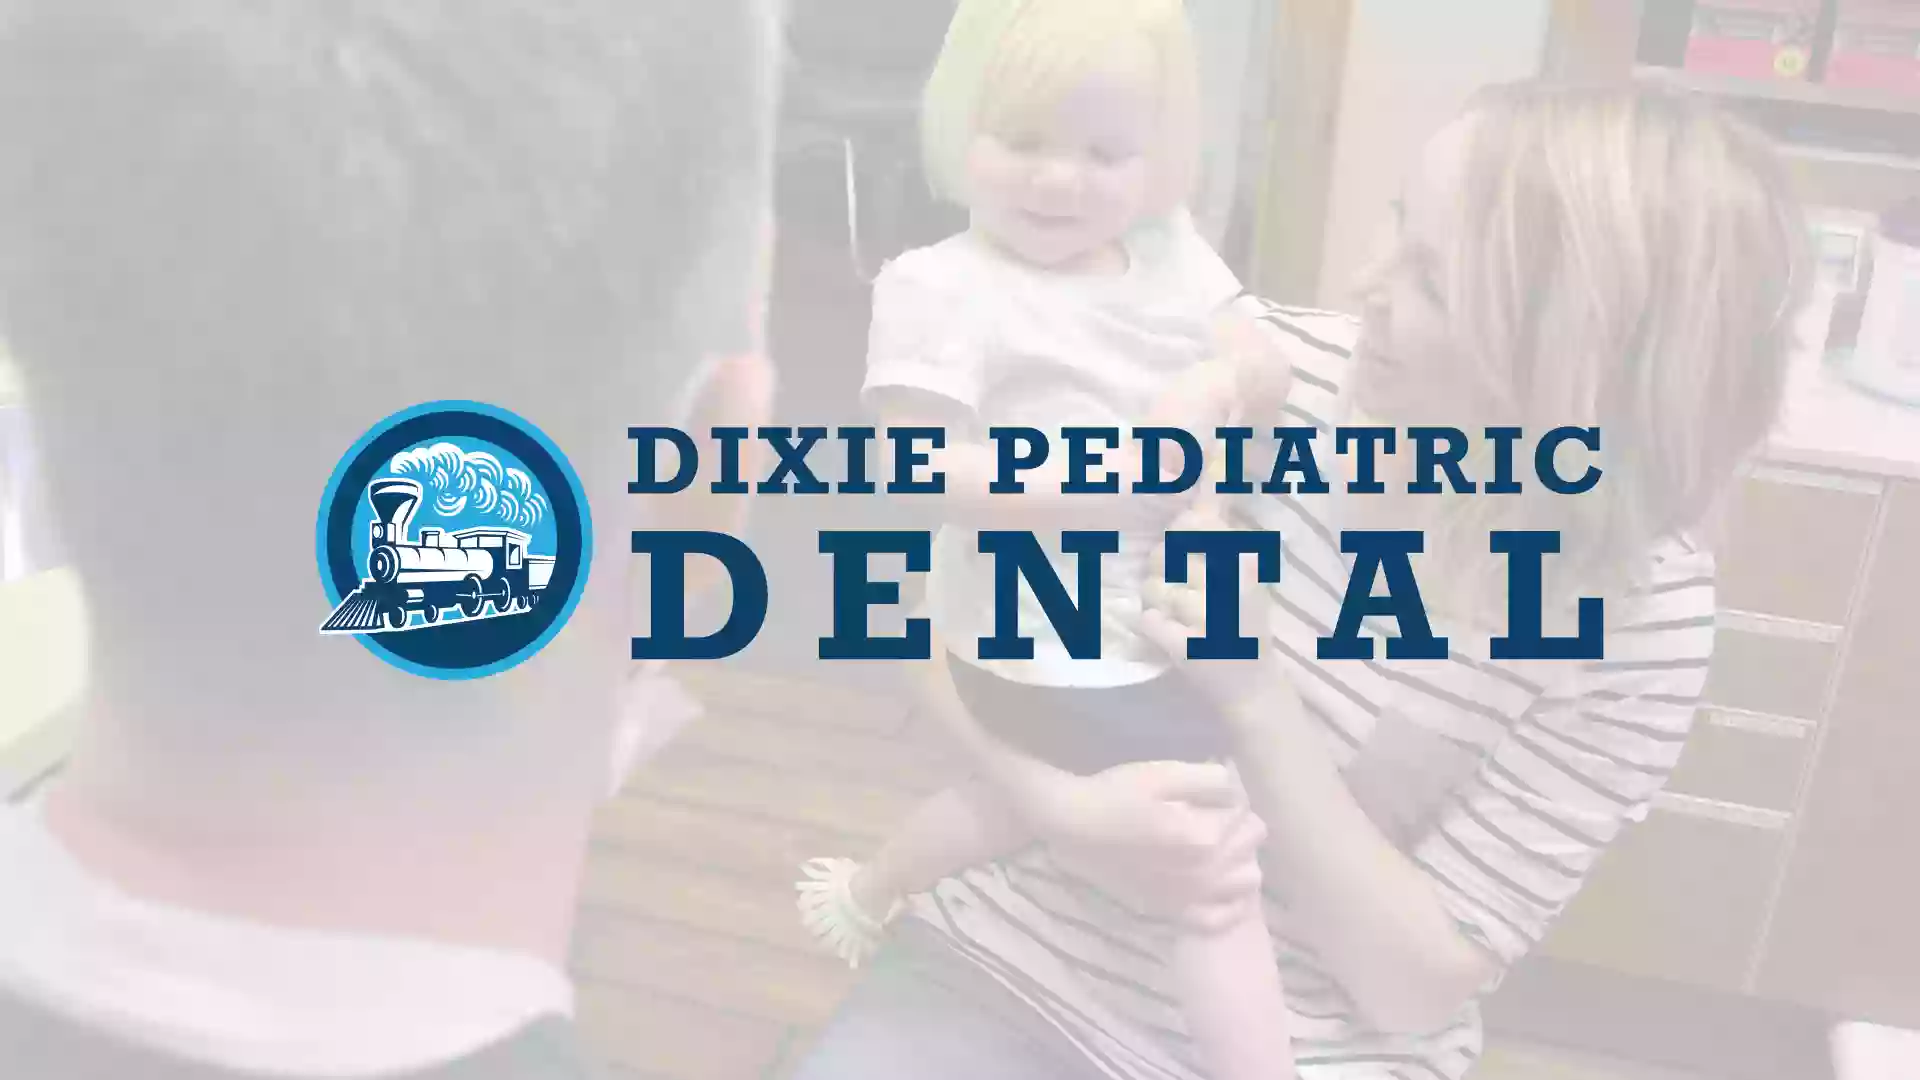 Dixie Pediatric Dental